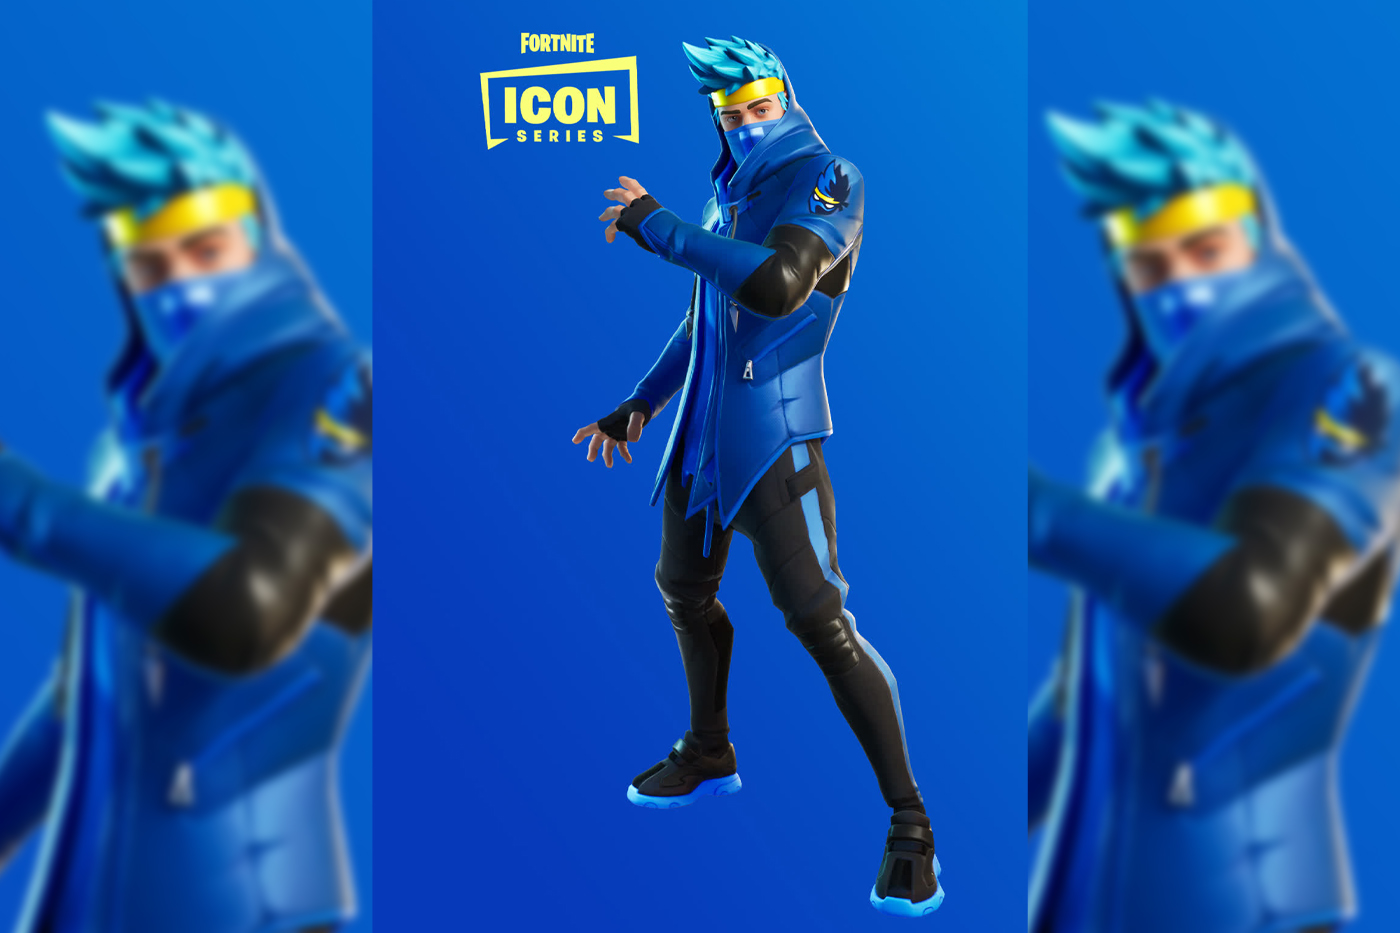 'Fortnite' Ninja Skin Revealed: How to Get the Icon Series ... - 1400 x 933 jpeg 360kB